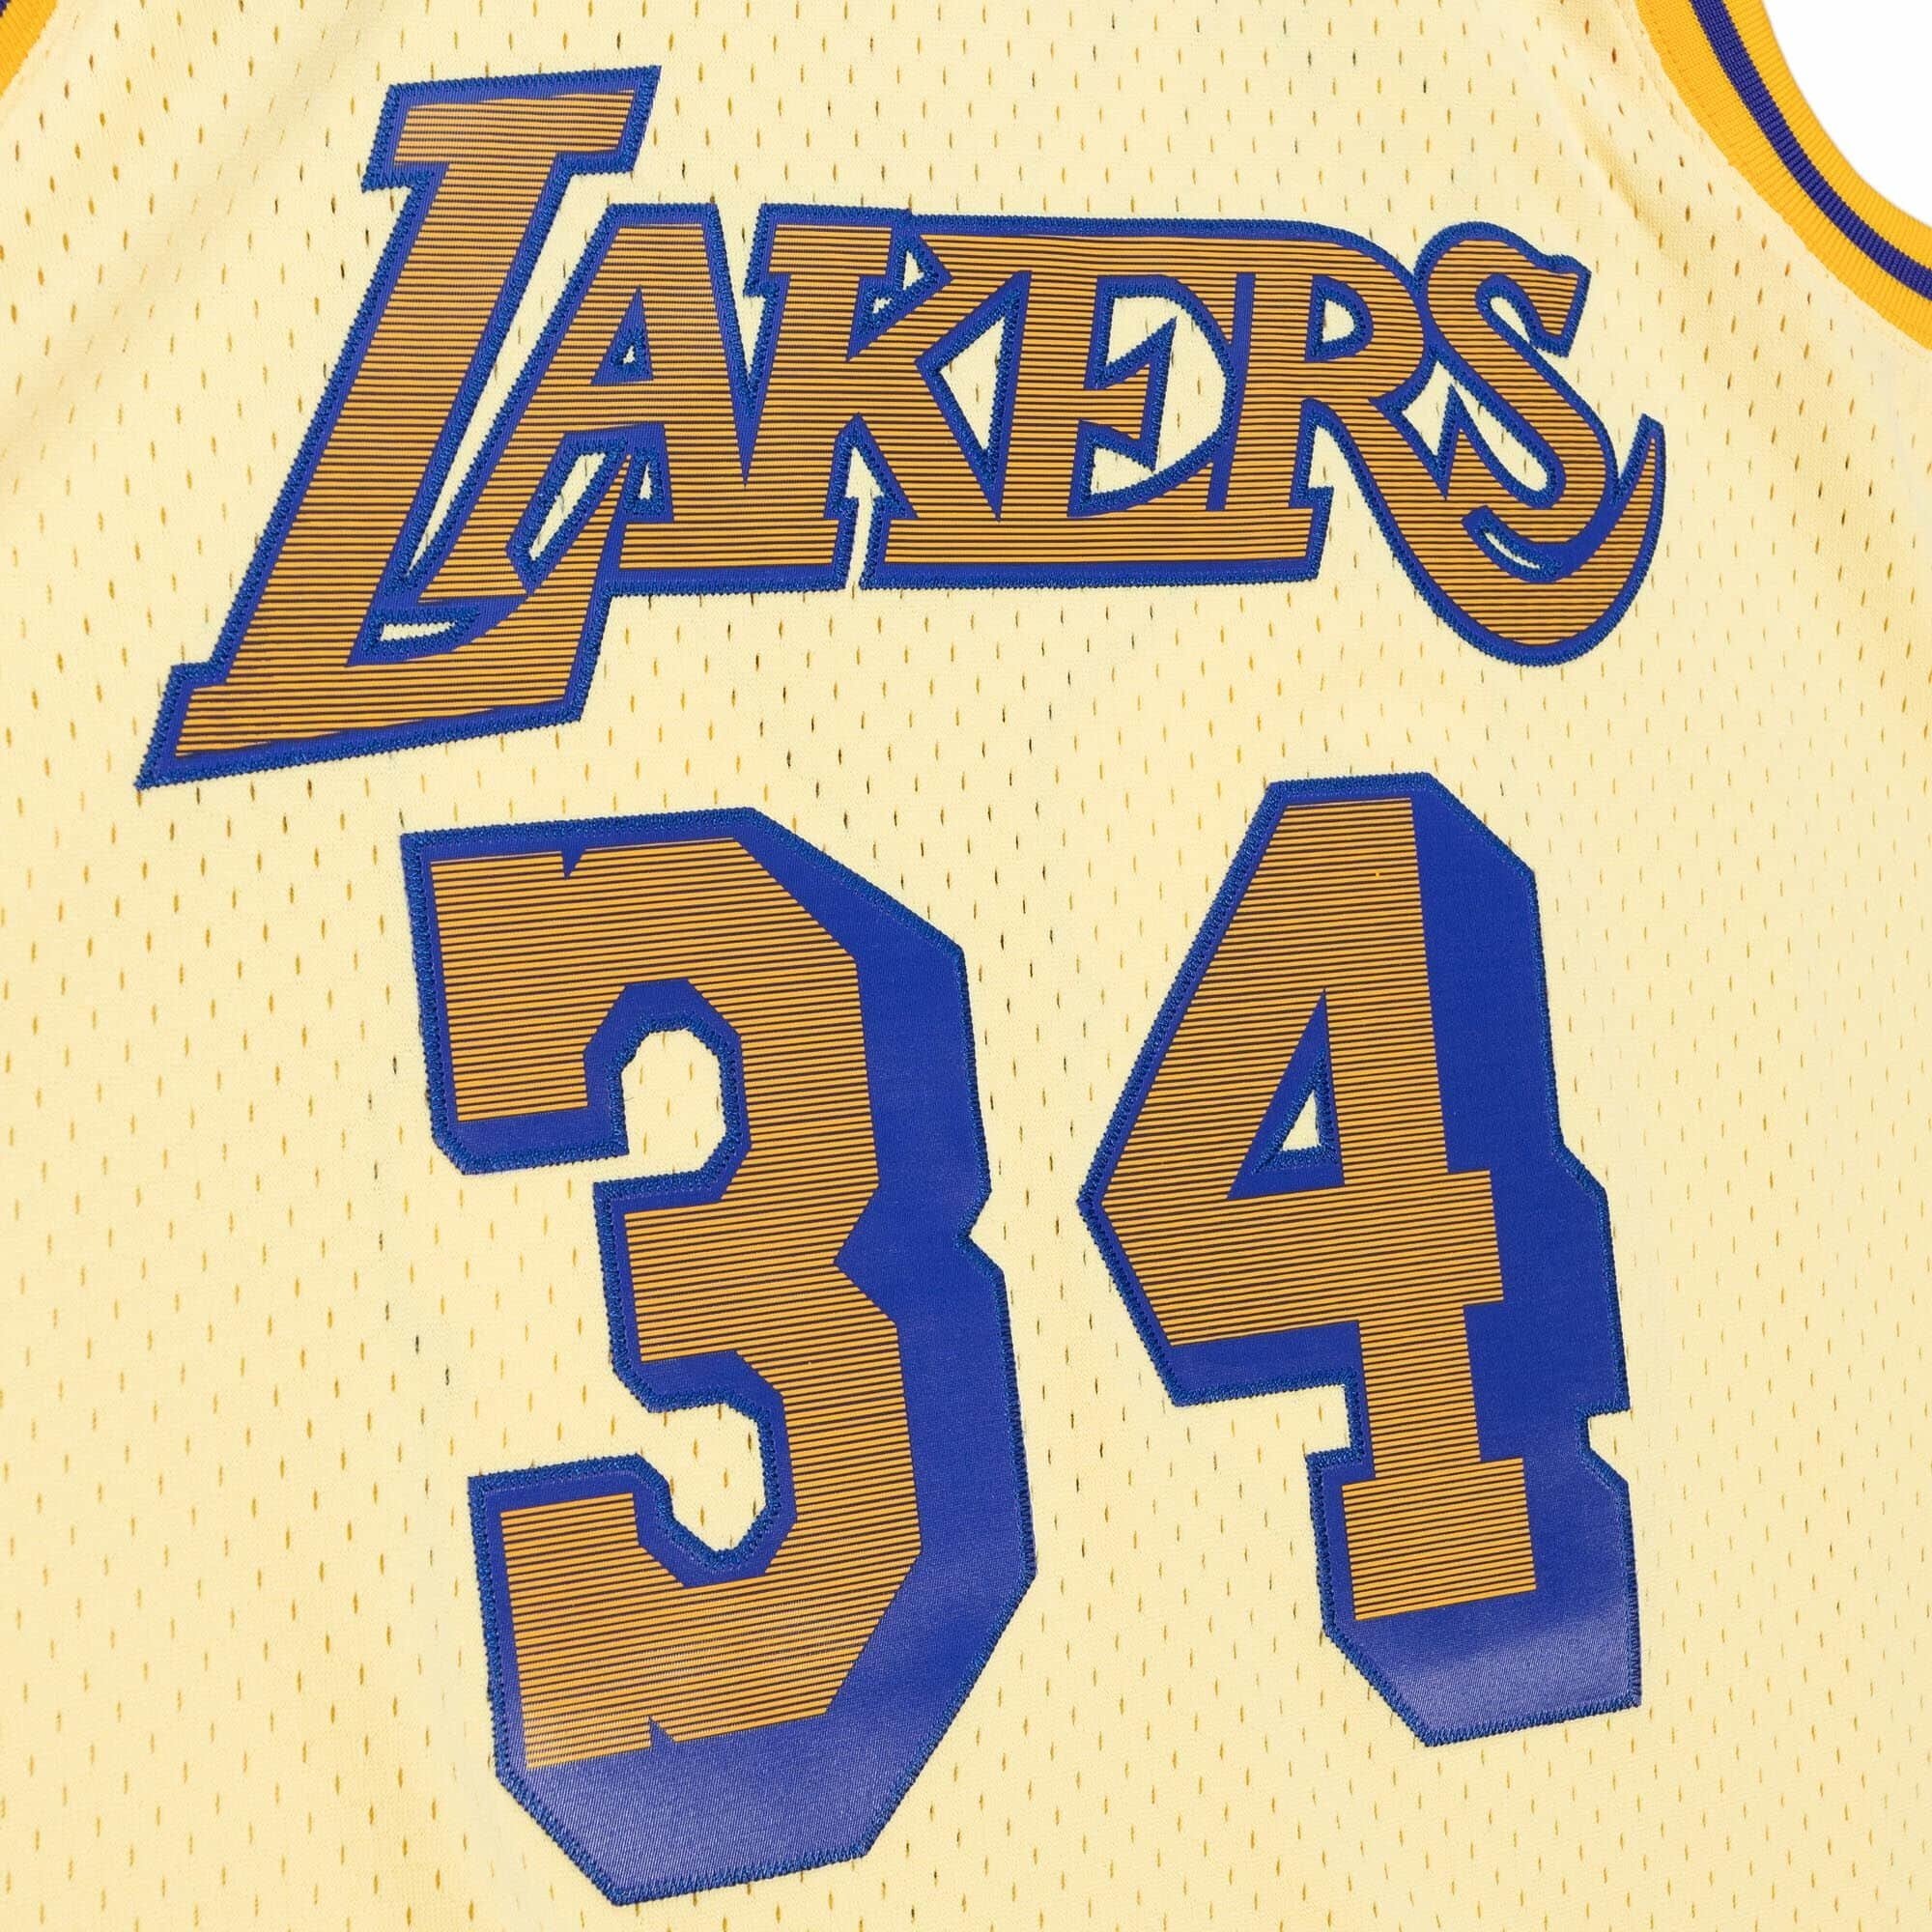 Mitchell & Ness NBA Reload Swingman Jersey LA Lakers 1996-97 Shaquille  O'Neal #34 Black